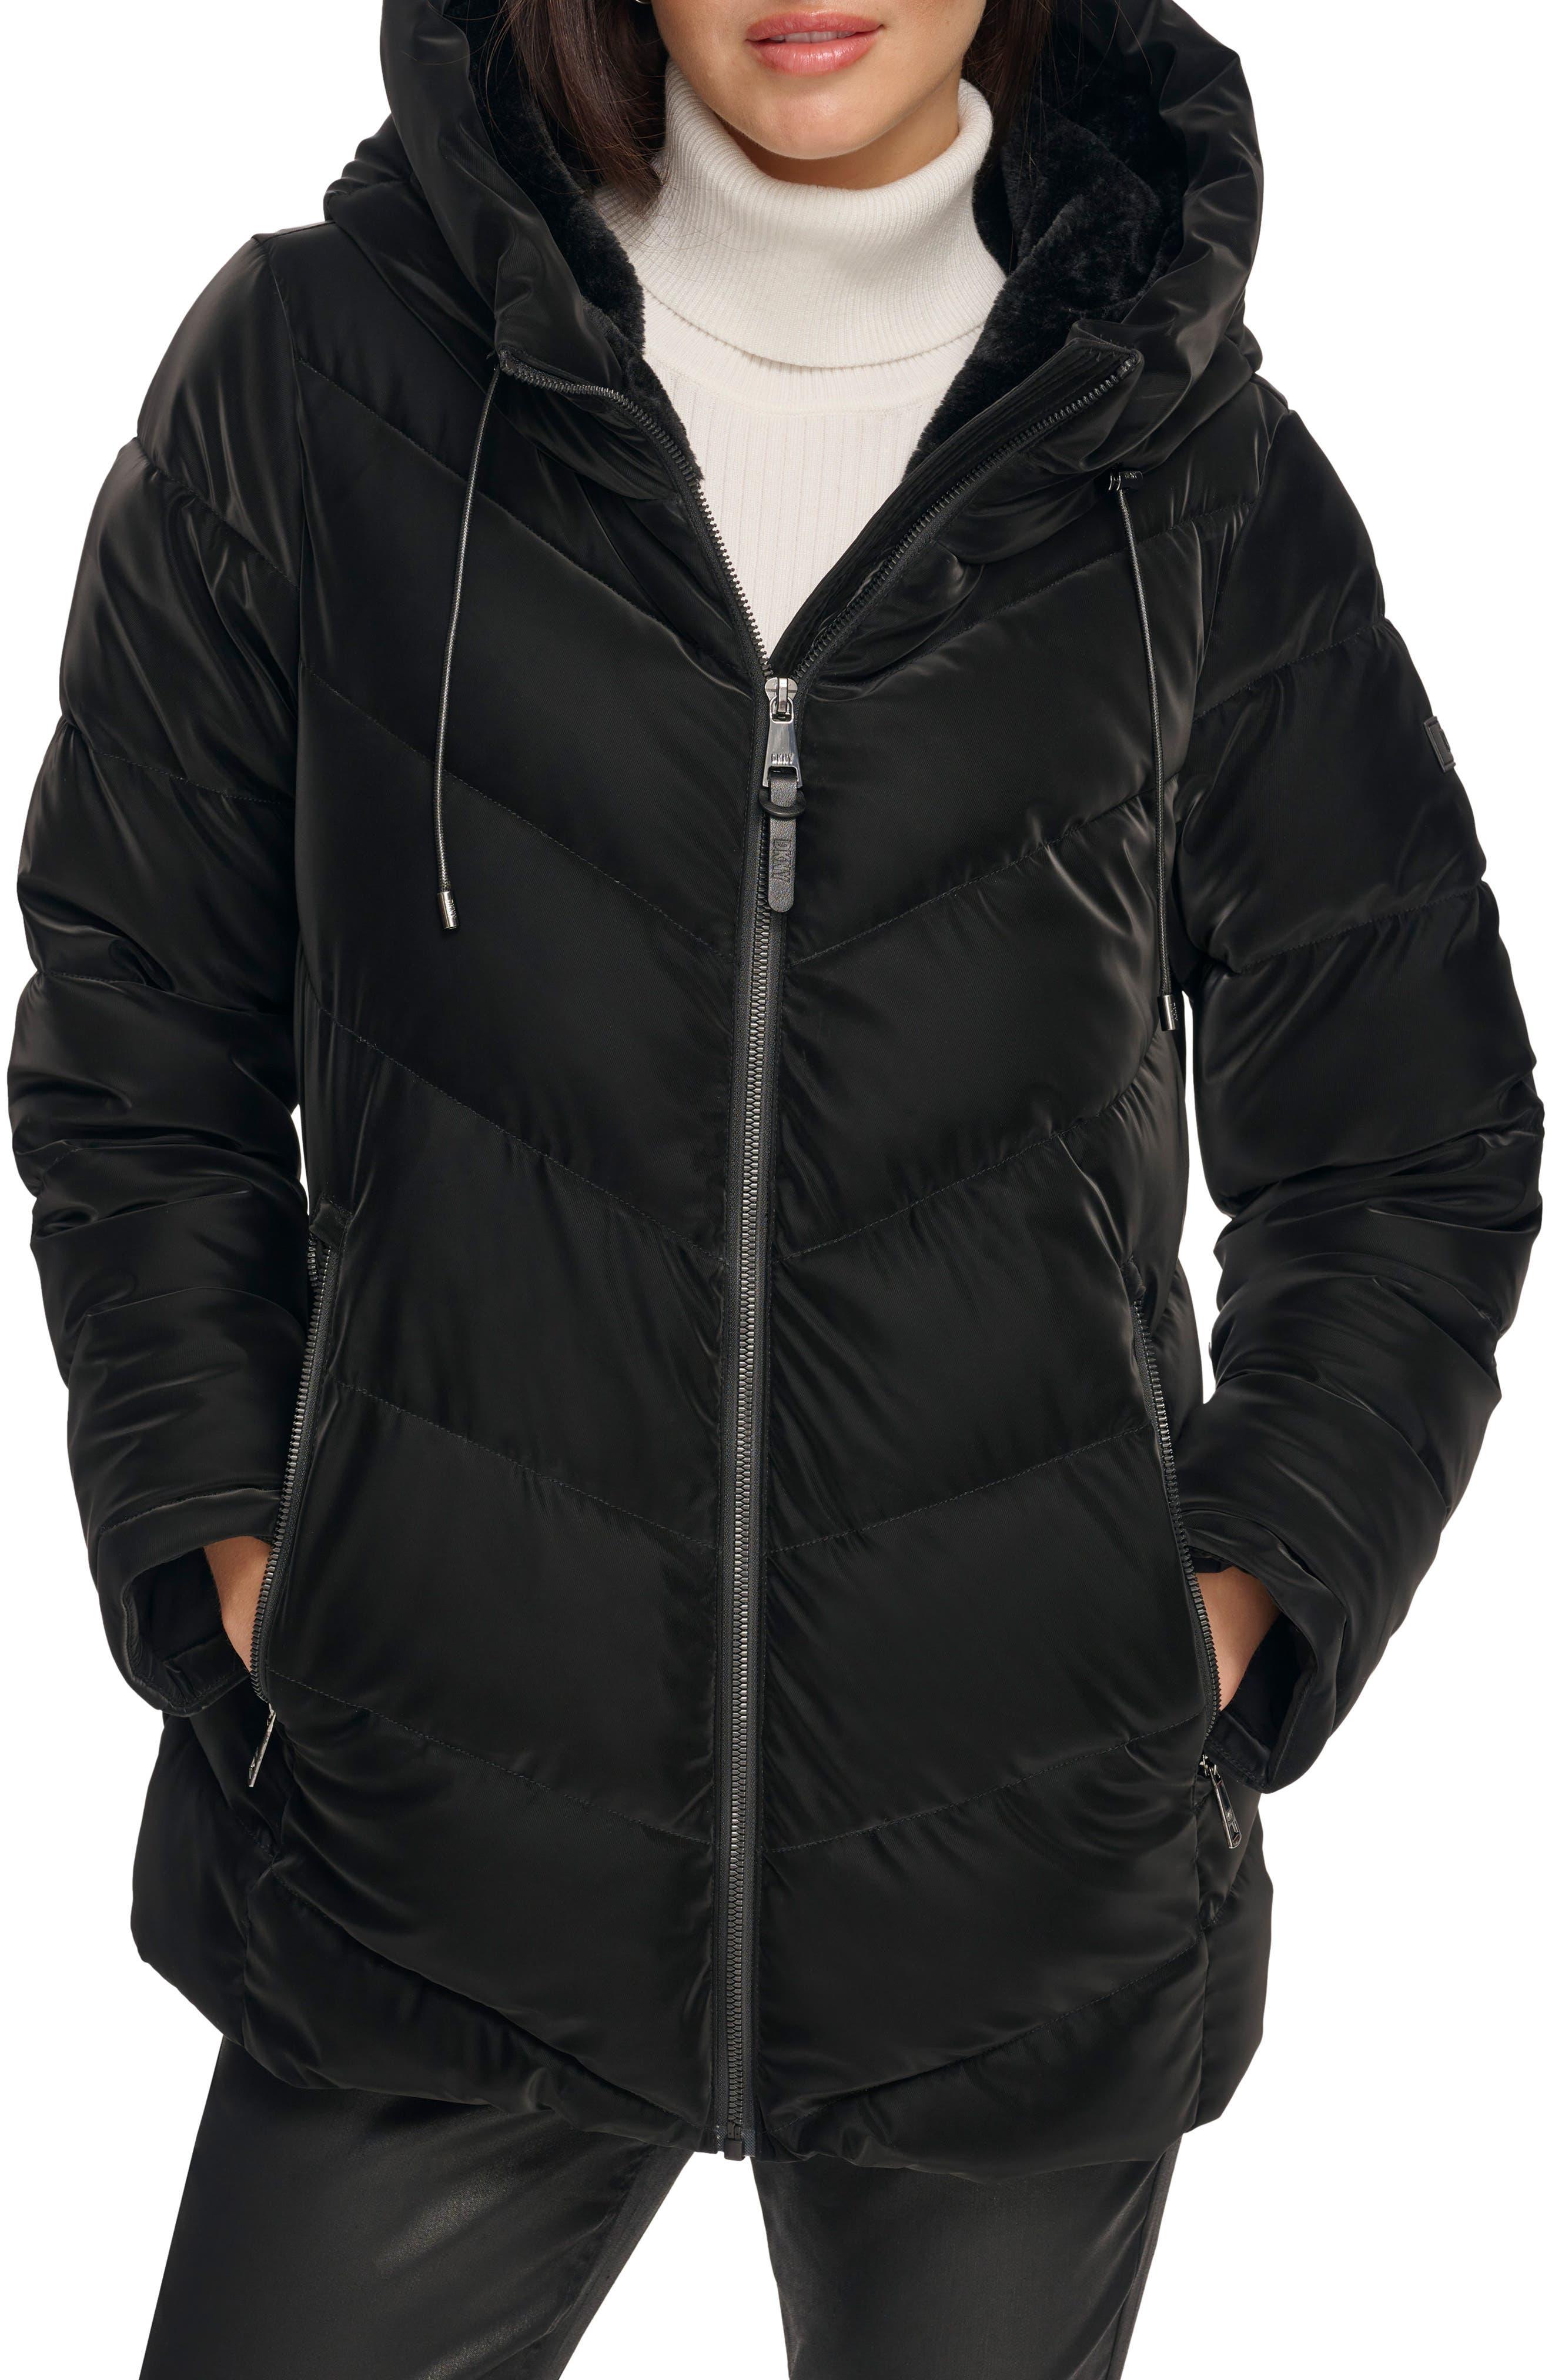 DKNY Water Resistant Faux Fur Lined Hood Puffer Jacket in Black